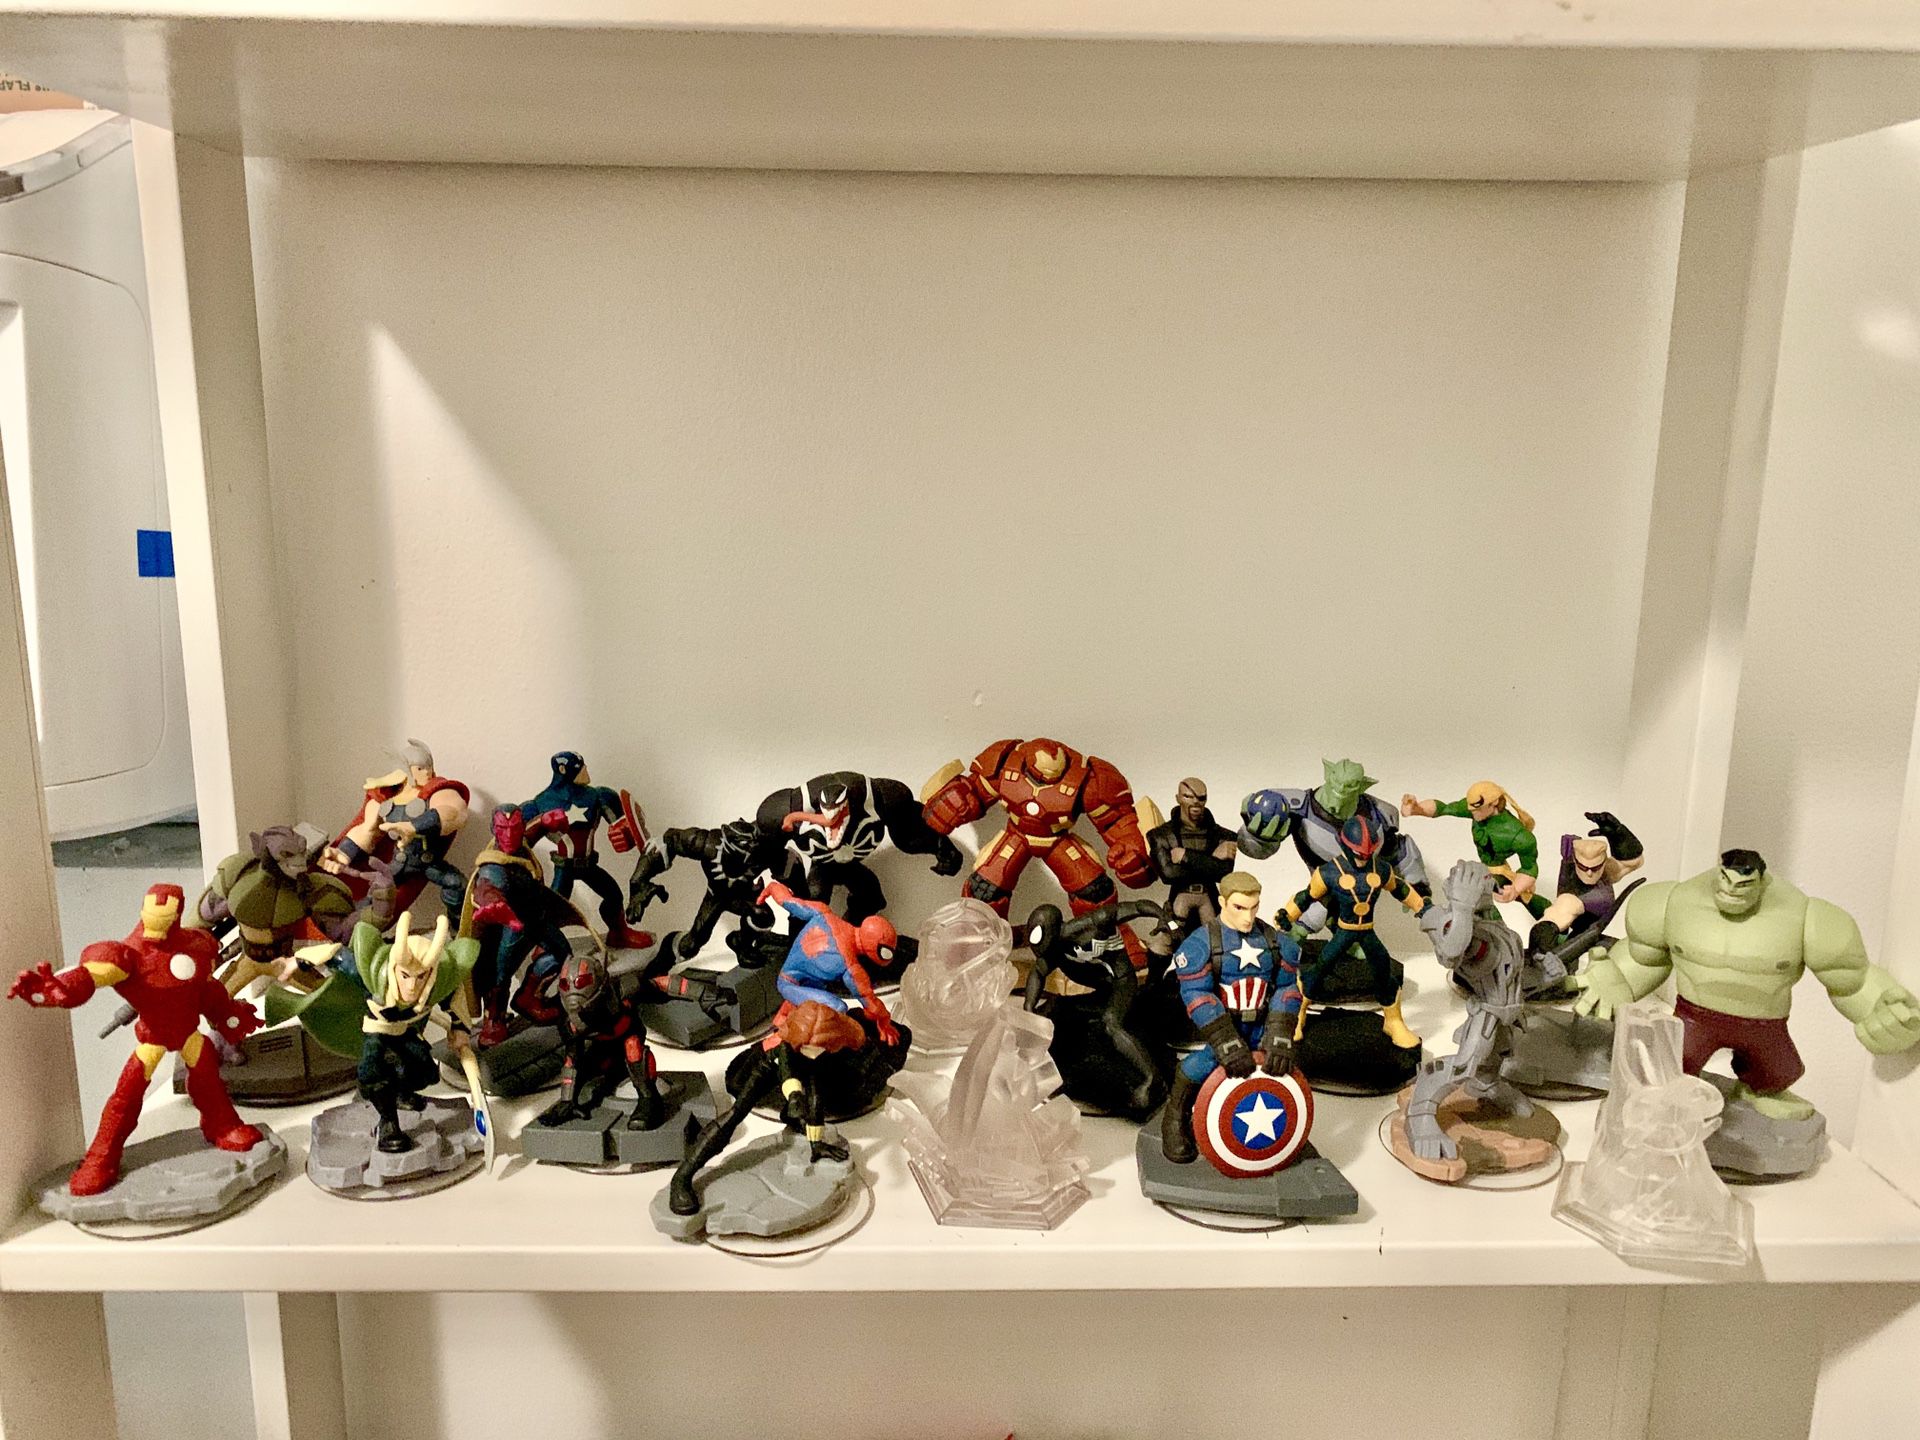 Disney infinity marvel super hero’s black suit spider man, captain America battlegrounds, hulk buster, black panther, ant man